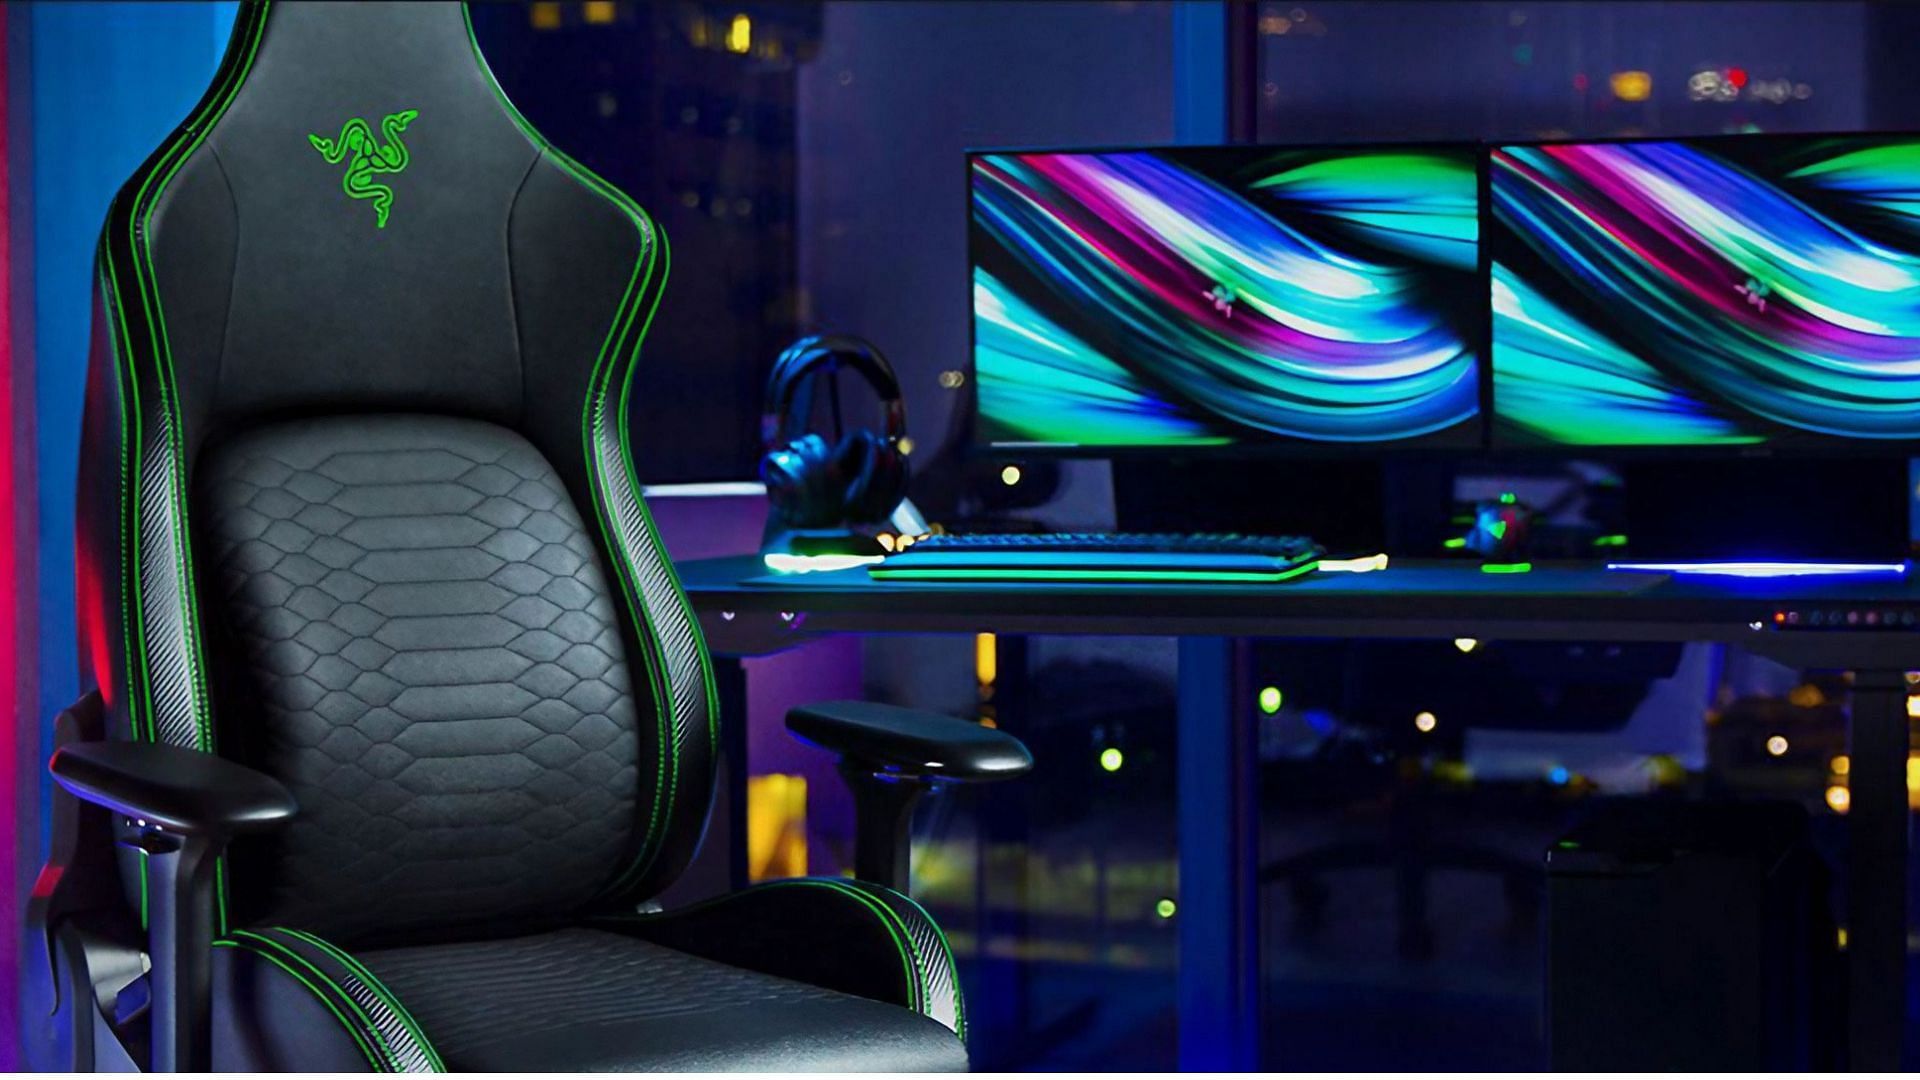 The Best Gaming Chair in 2022 - Razer Iskur